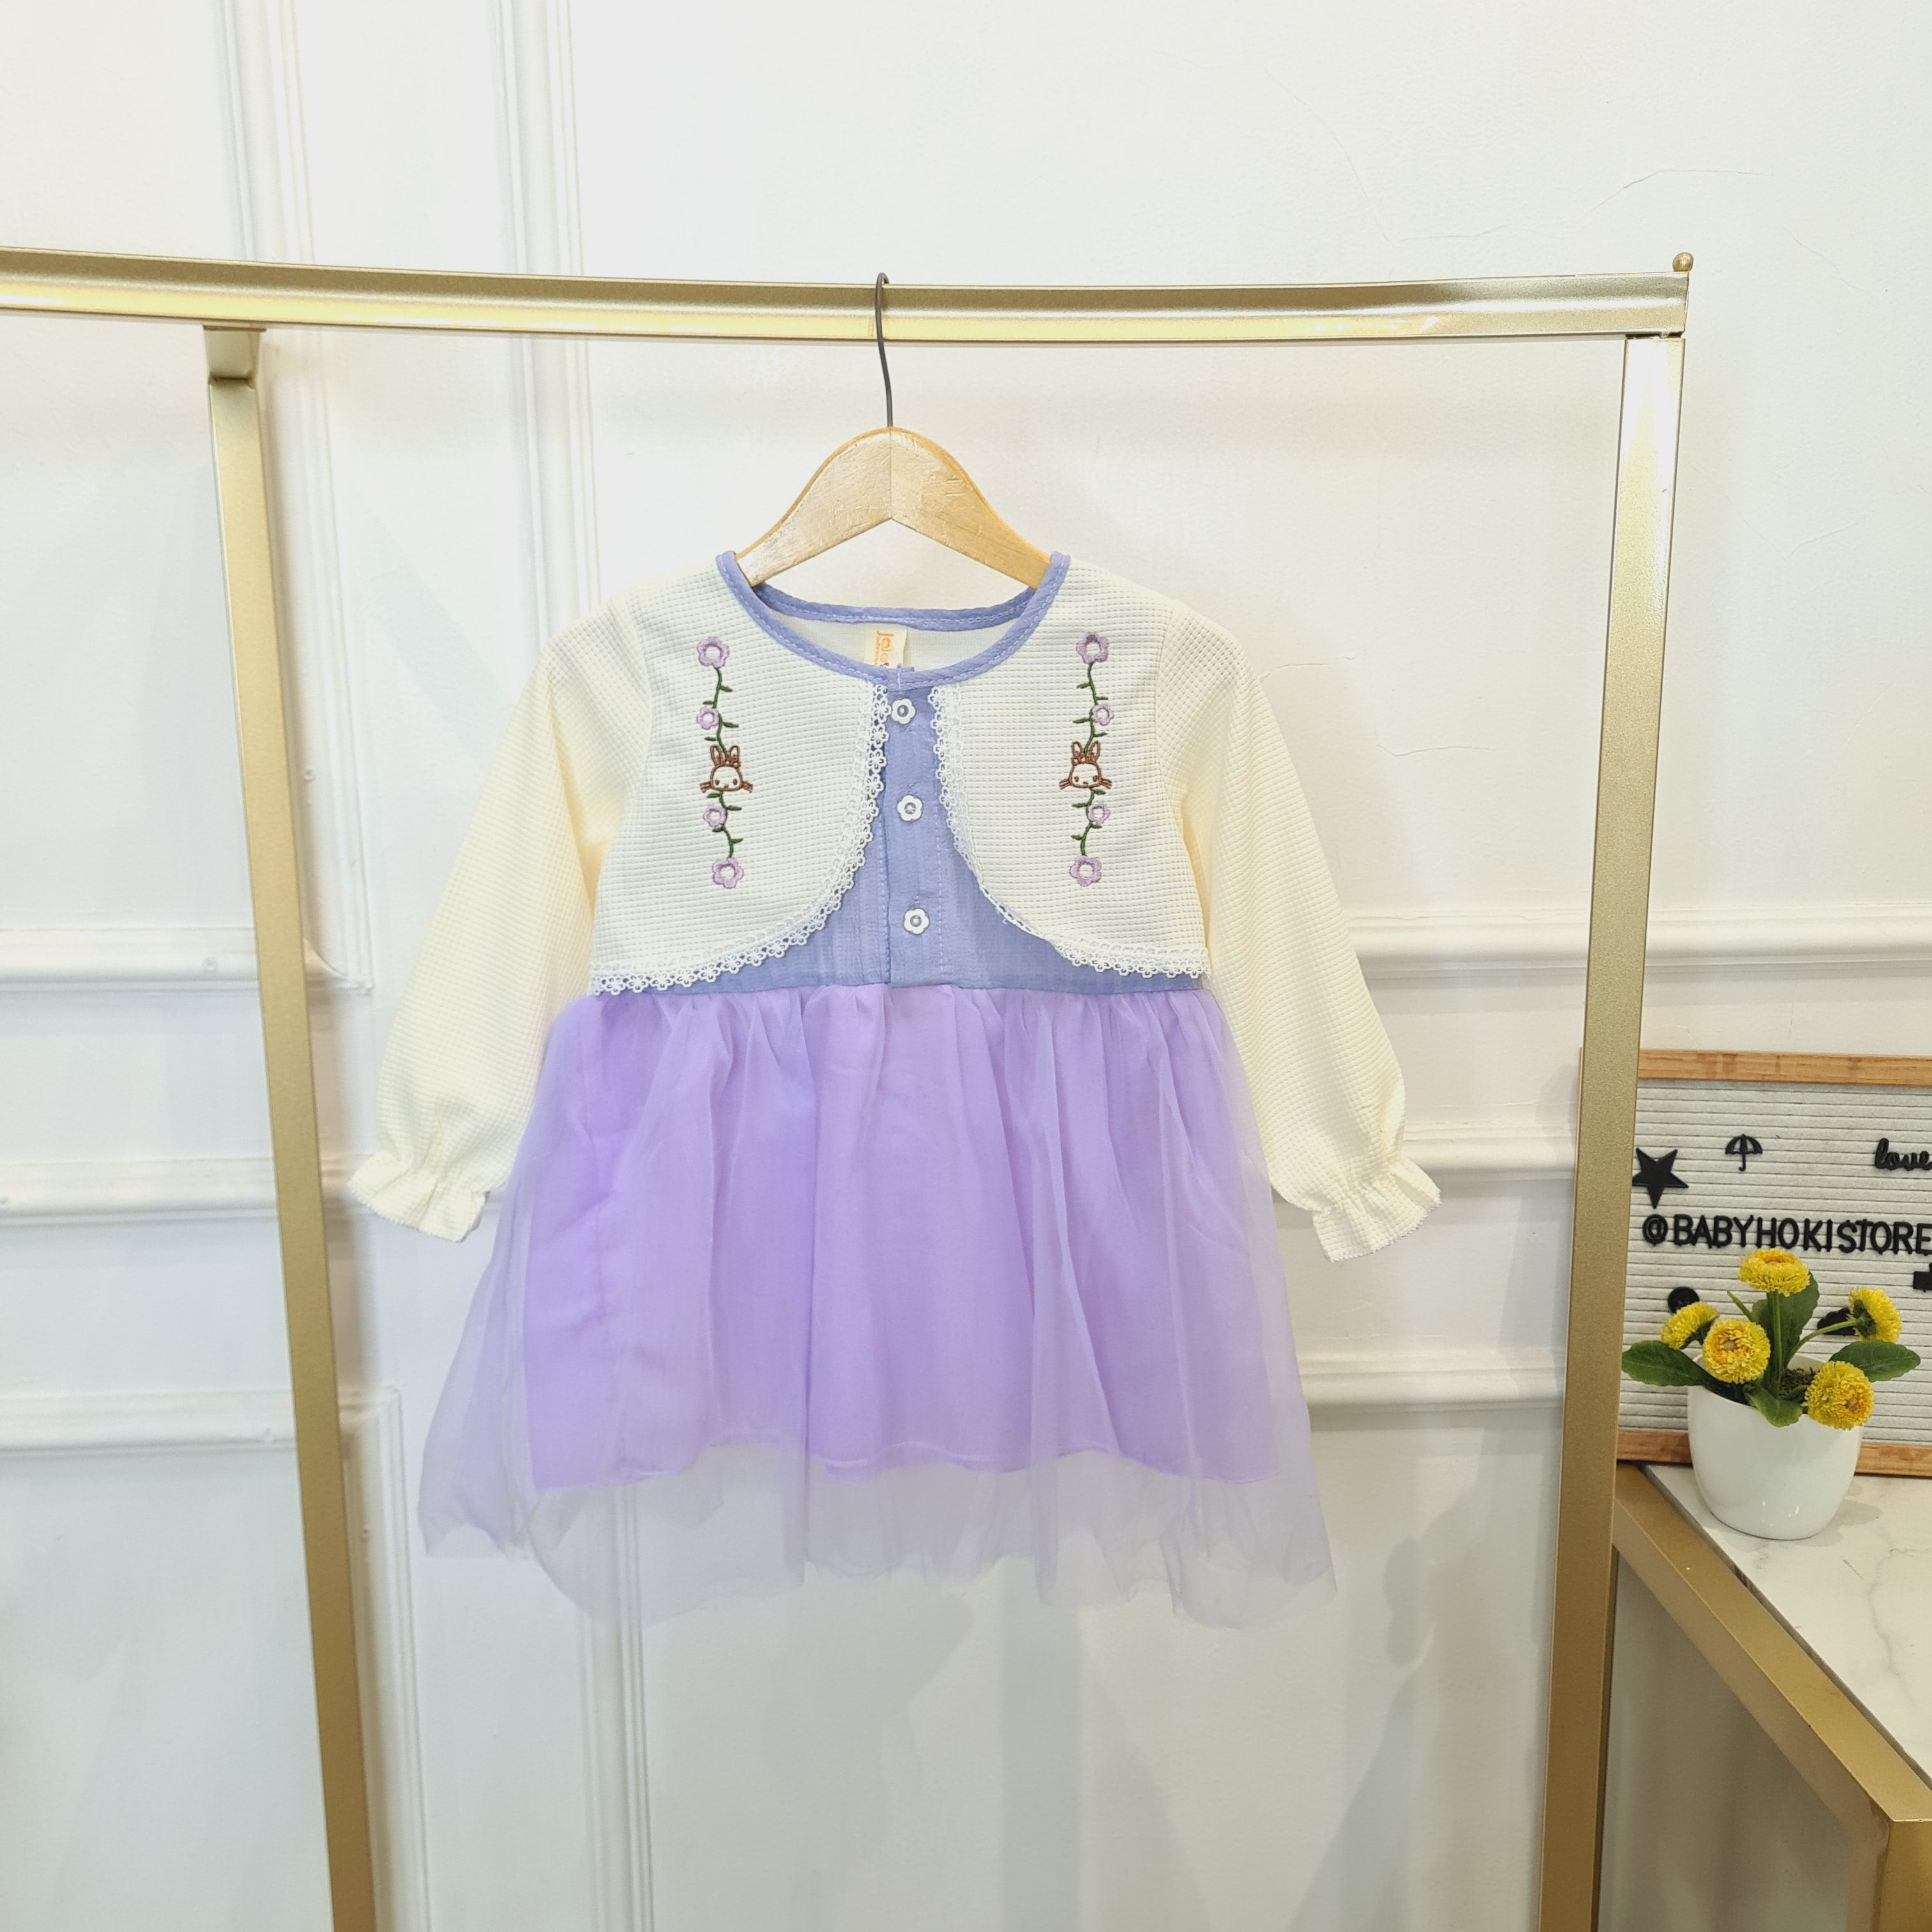 [340422-V1] - Baju Dress Lengan Panjang Rajut Fashion Anak Perempuan Import - Motif Knit Flower